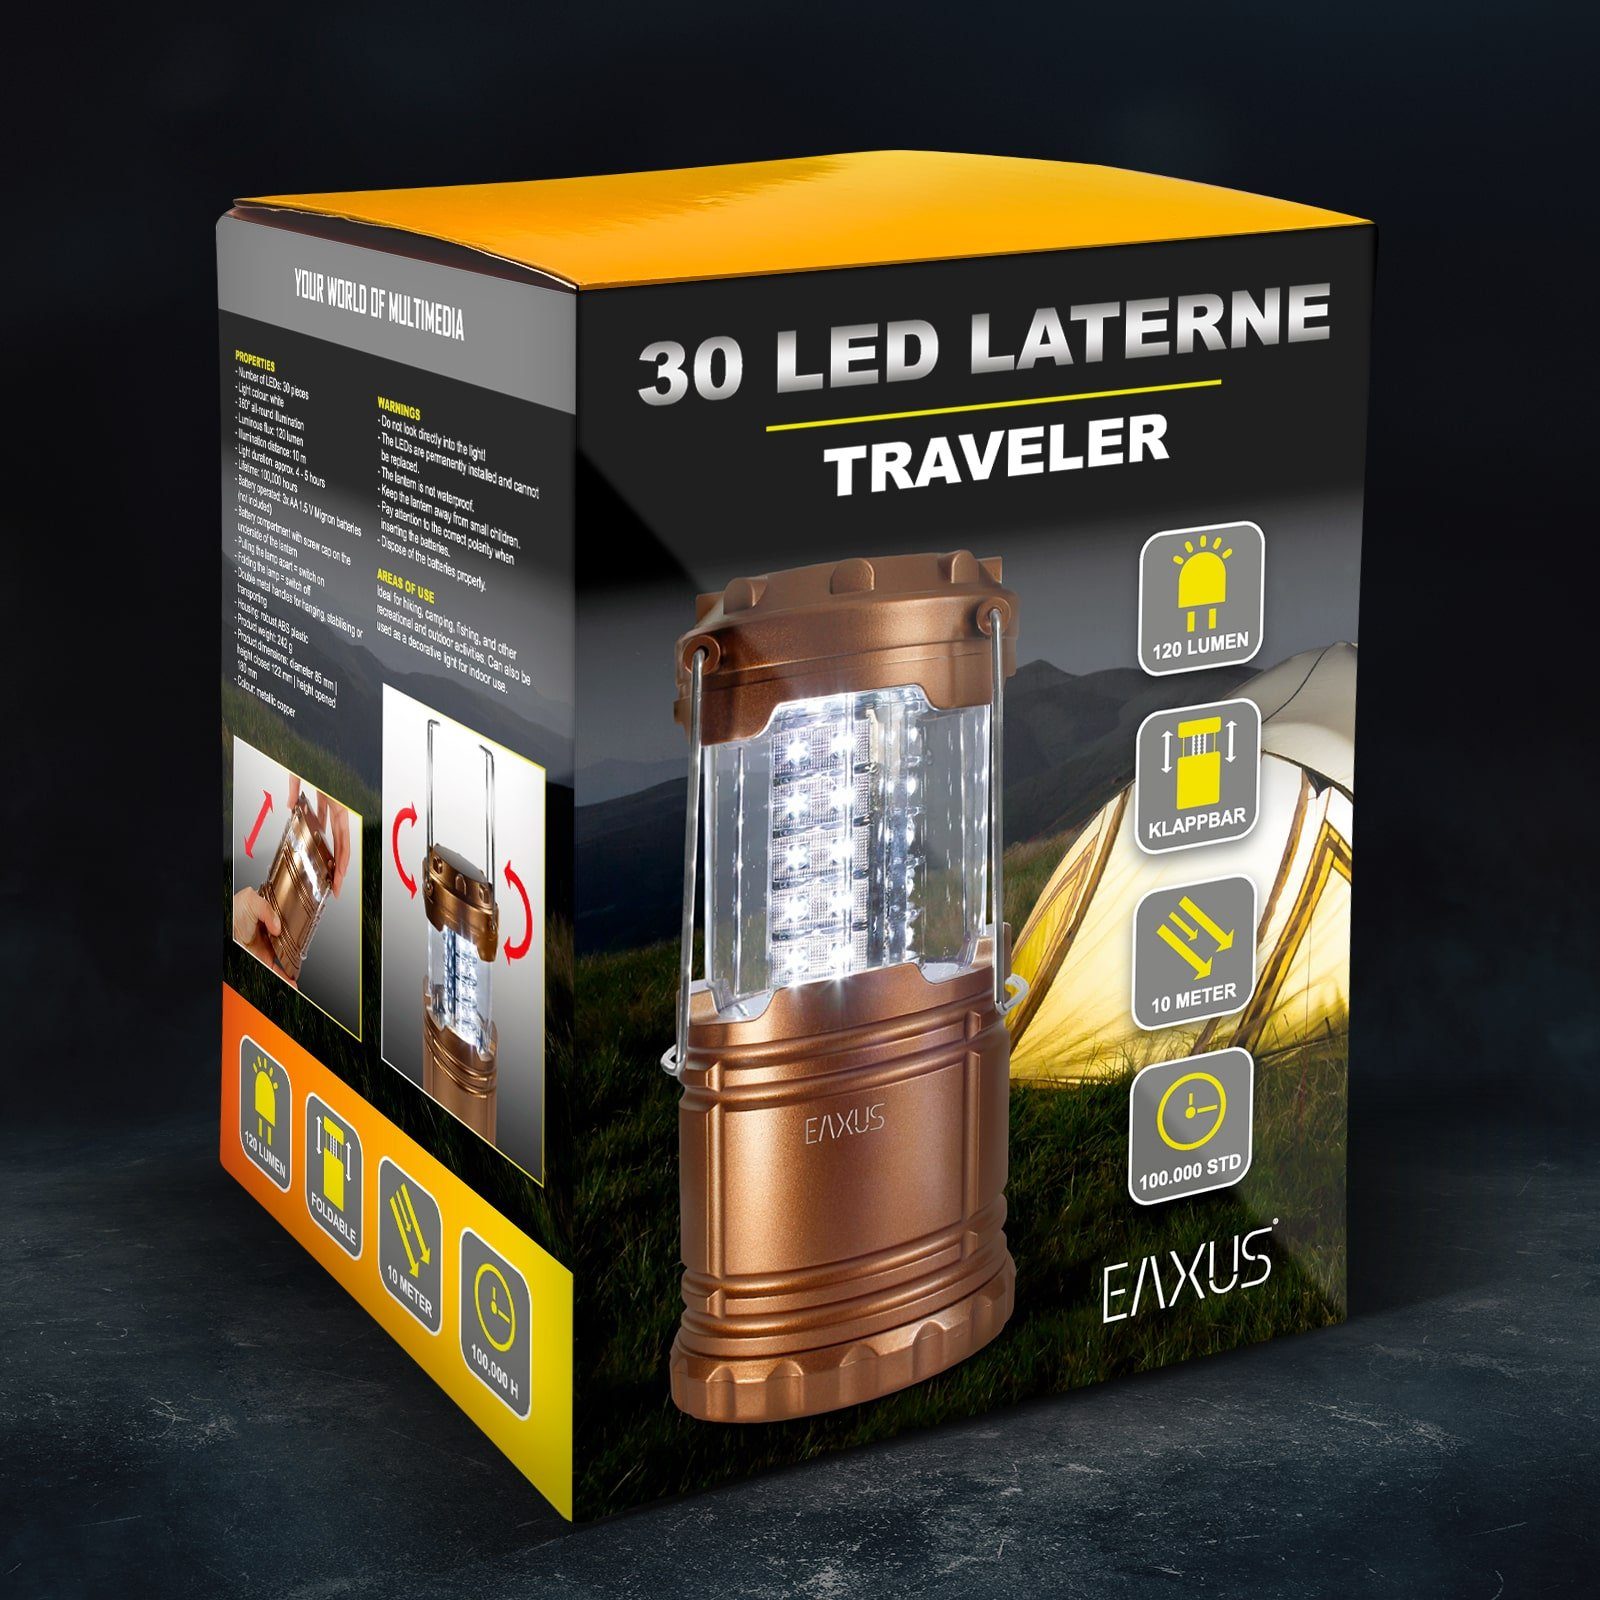 EAXUS LED Gartenleuchte integriert, Metallbügel fest Batteriebetrieben mit 360° LED Beleuchtung kaltweiß, Campinglampe Kupferfarben, LED Aufhängen, Tragebügel, zum 30